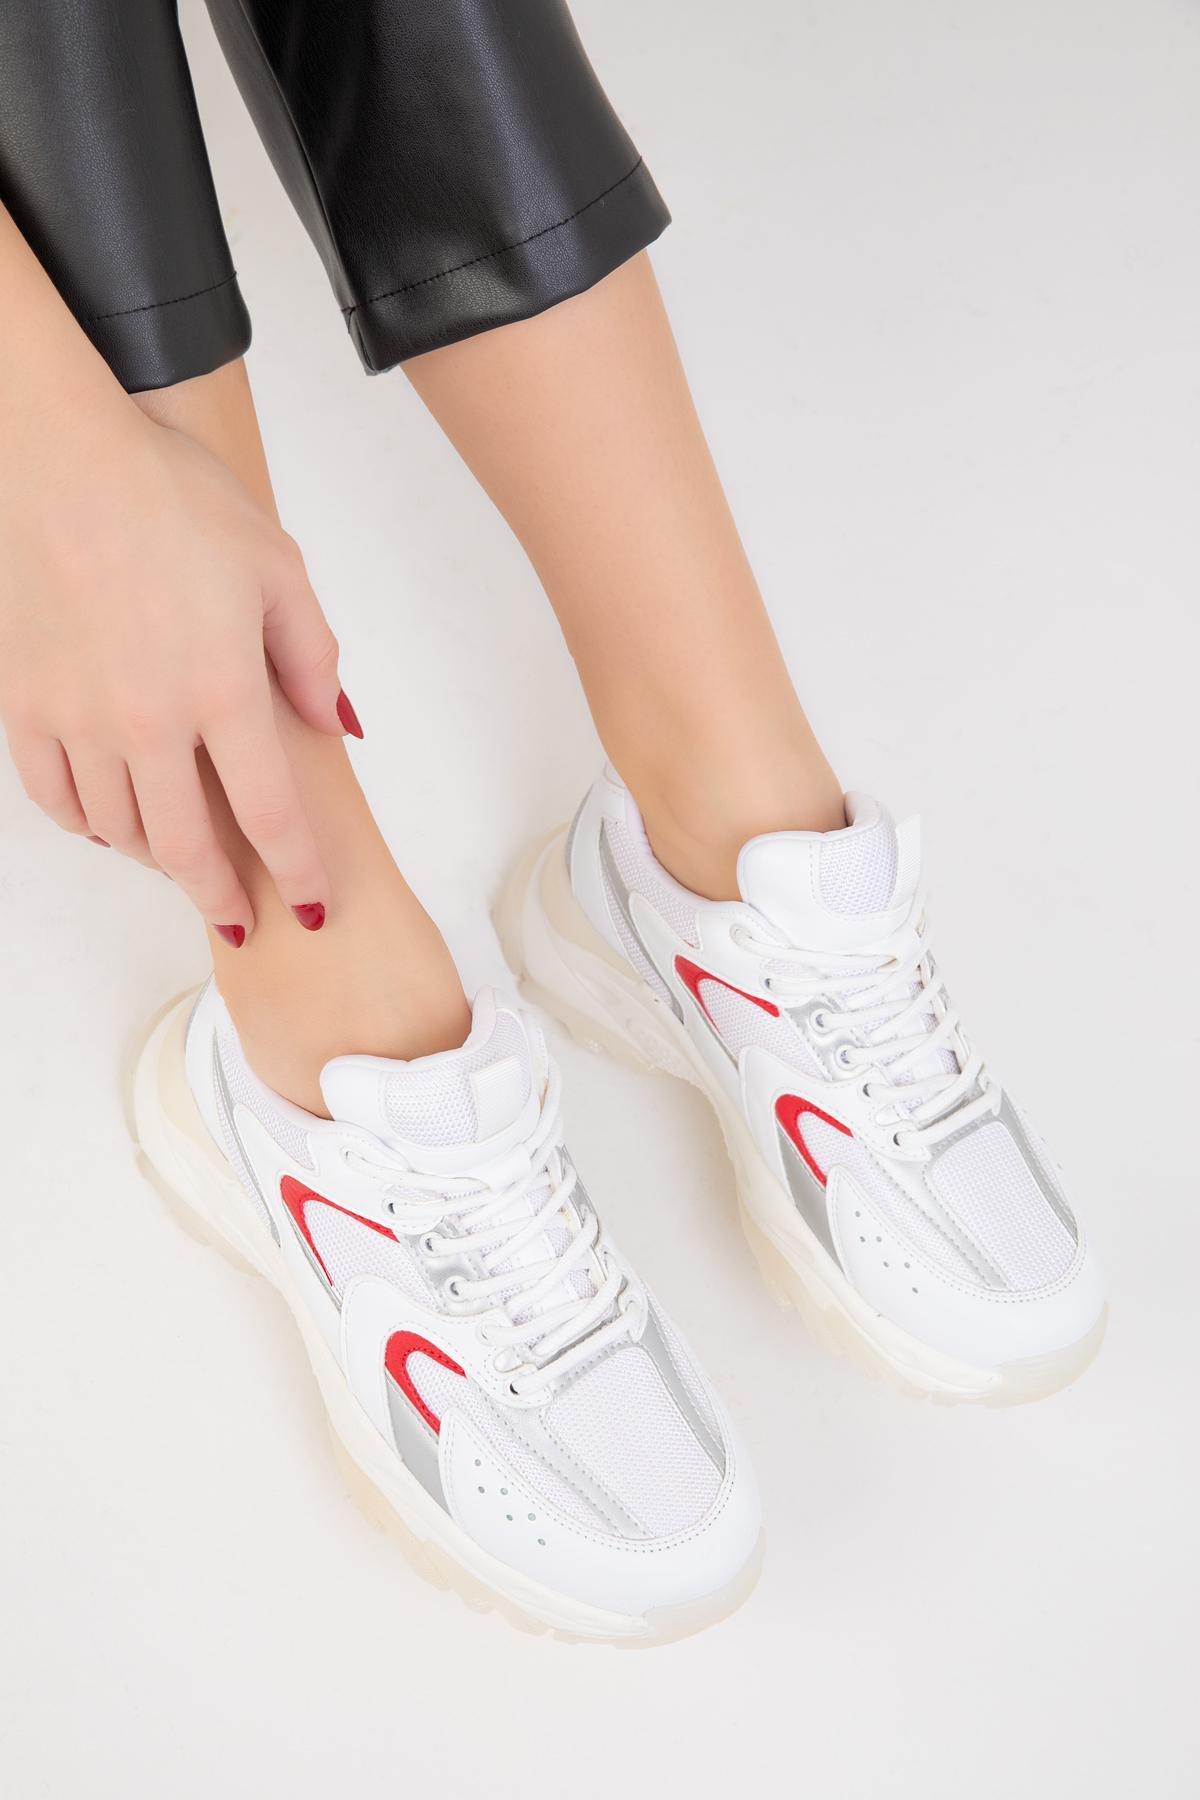 SOHO - White-Silver-Red Womens Sneaker 18109